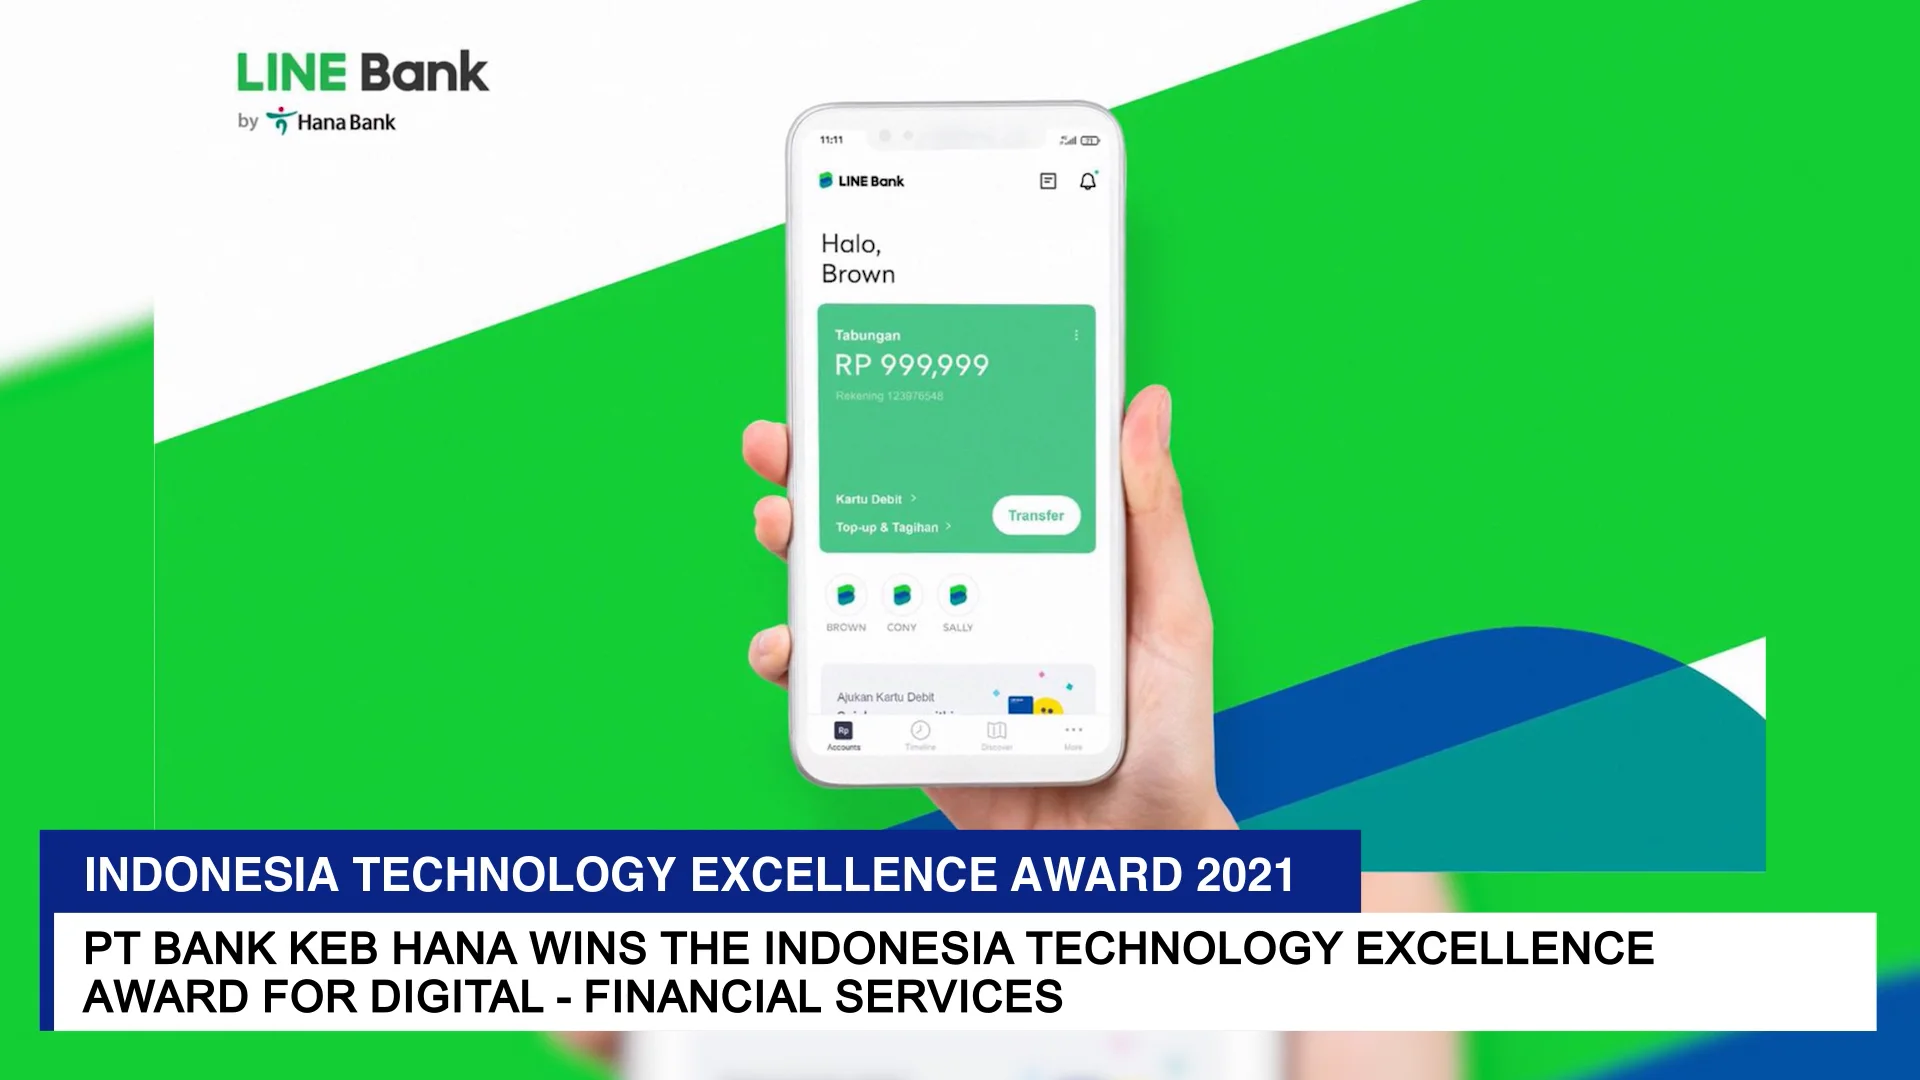 Indonesia Technology Excellence Award 2021 winner: PT Bank KEB Hana on Vimeo